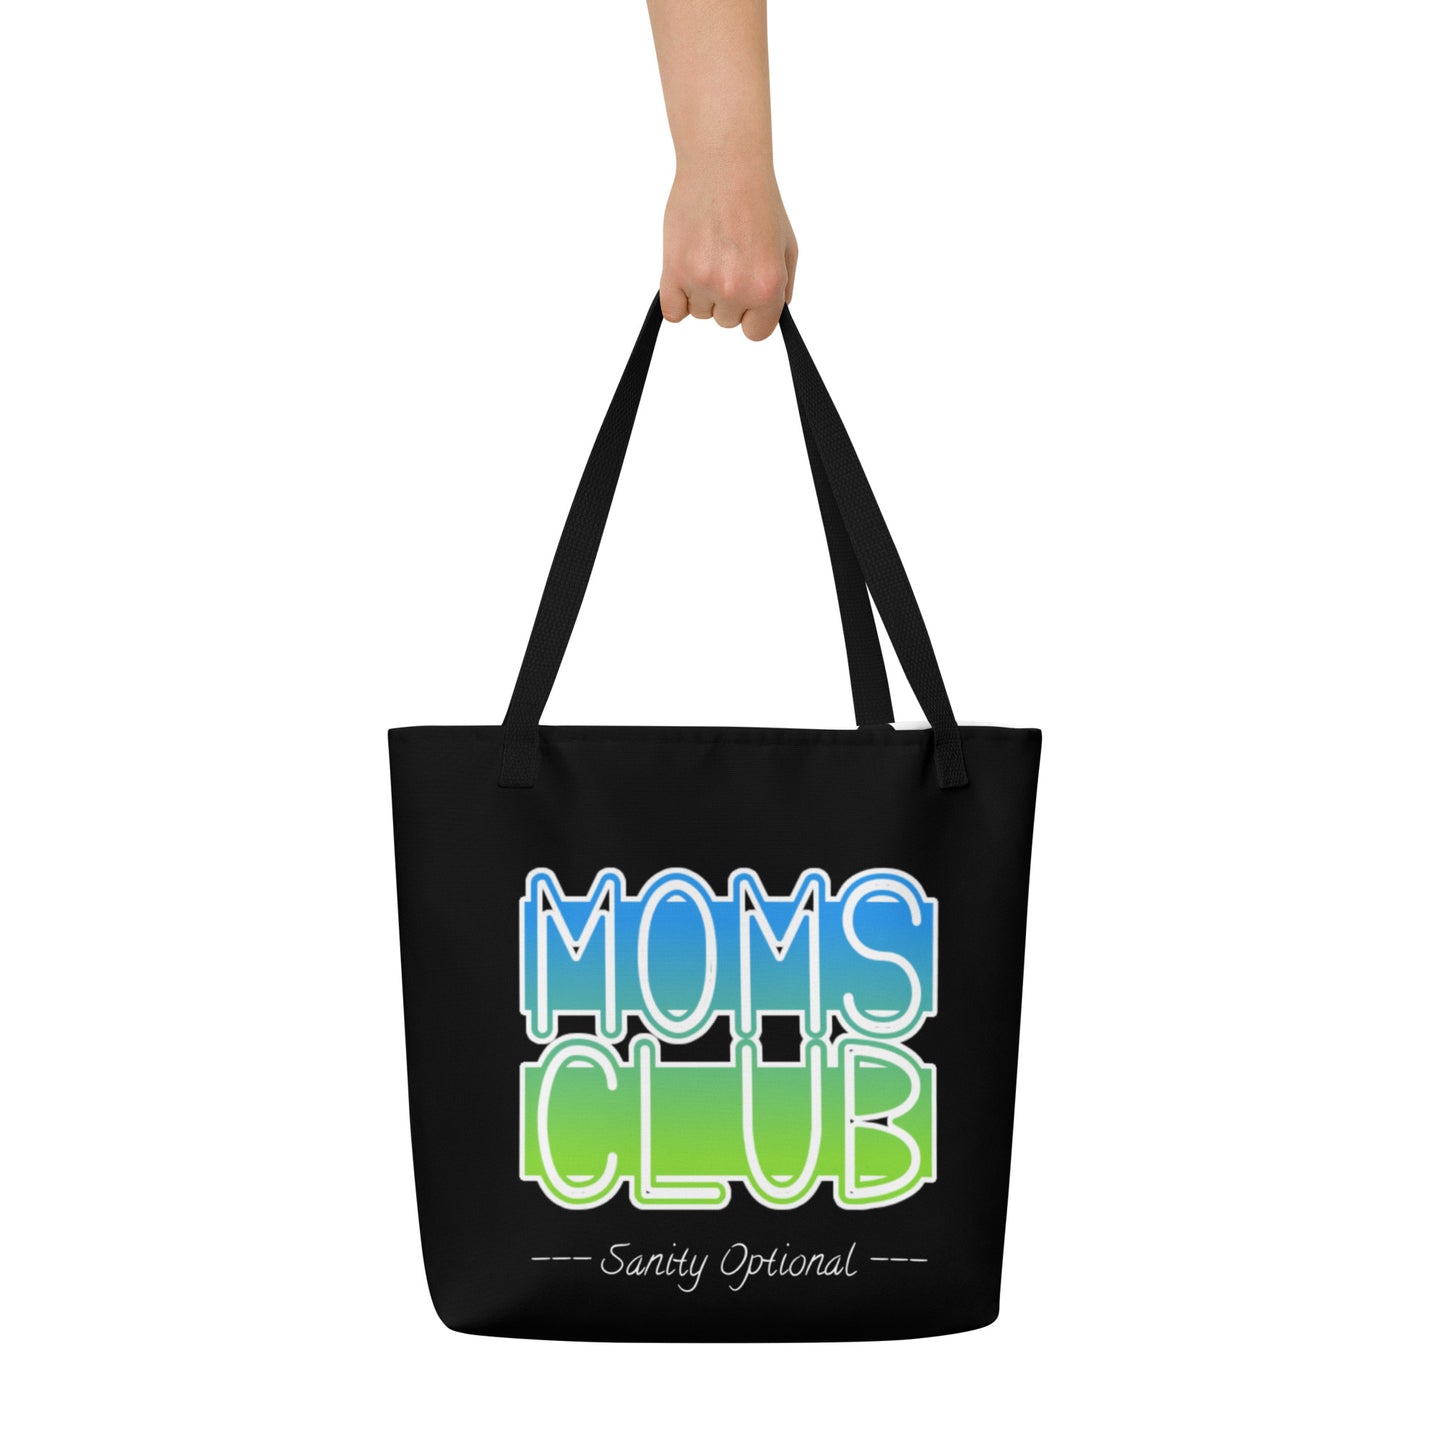 Moms Club Sanity Optional Large Tote Bag (blue-green)